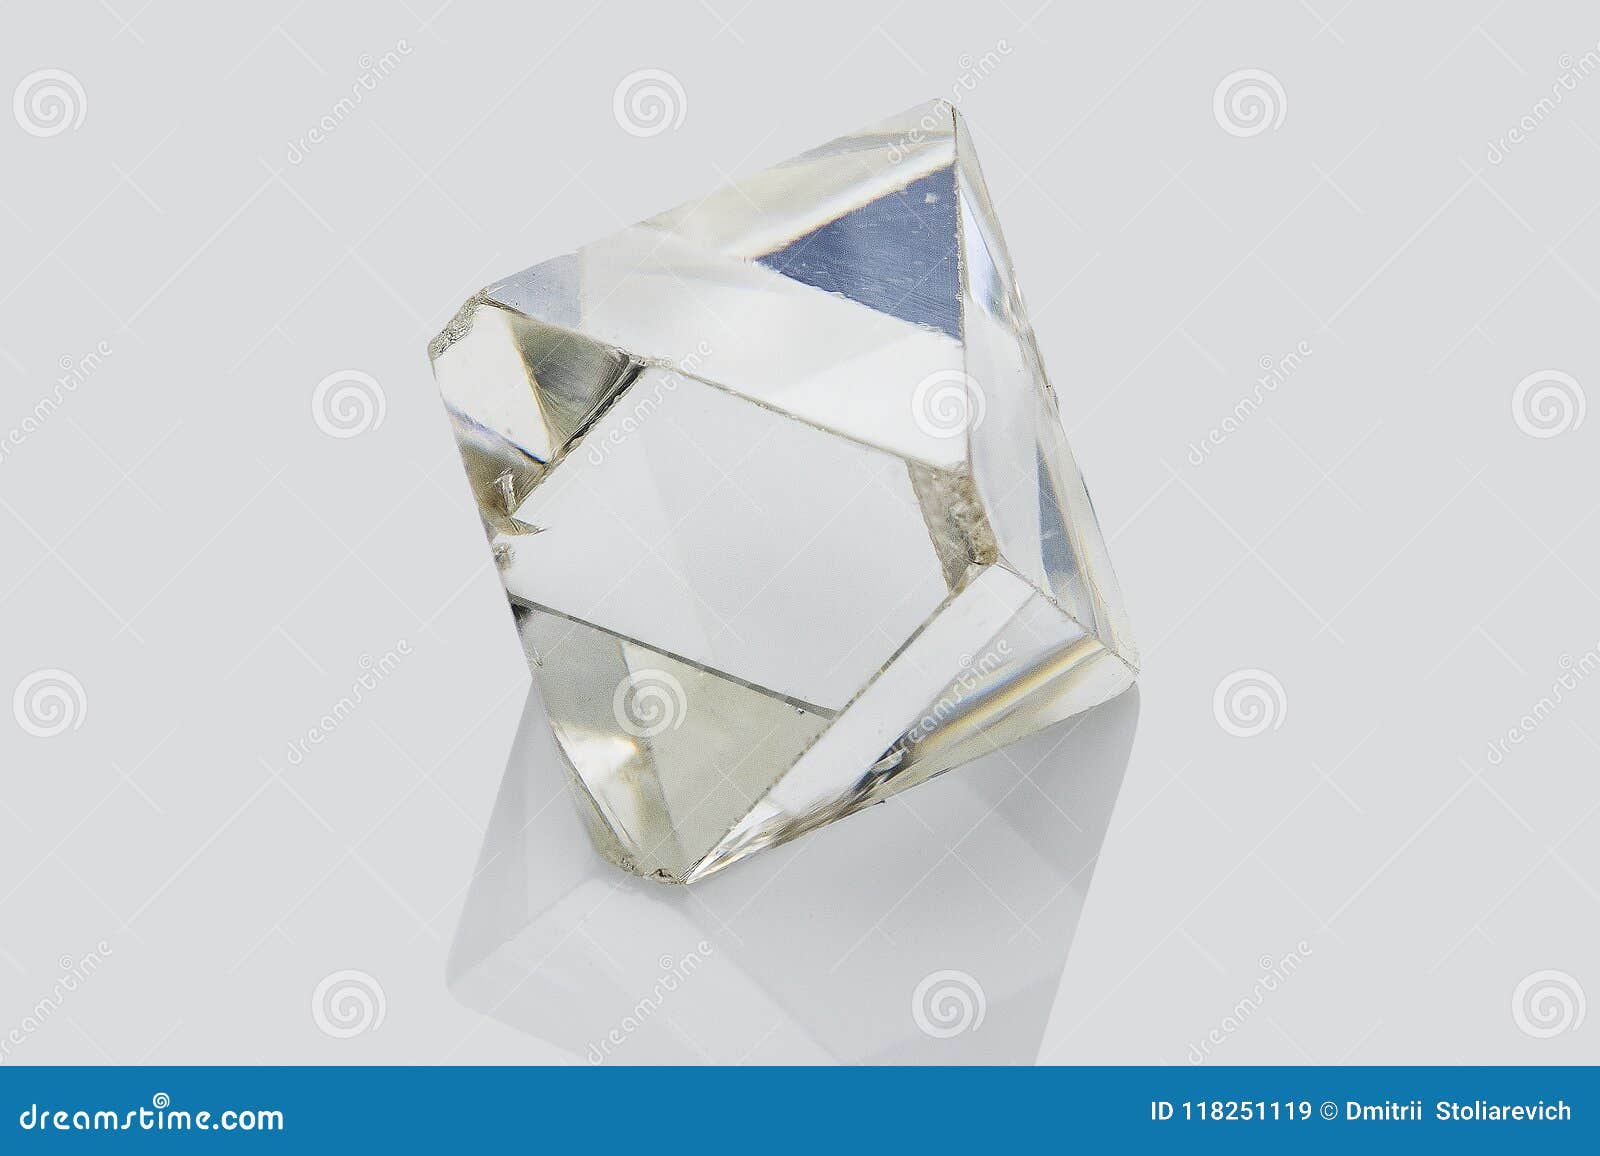 transparent rough diamond  on white background